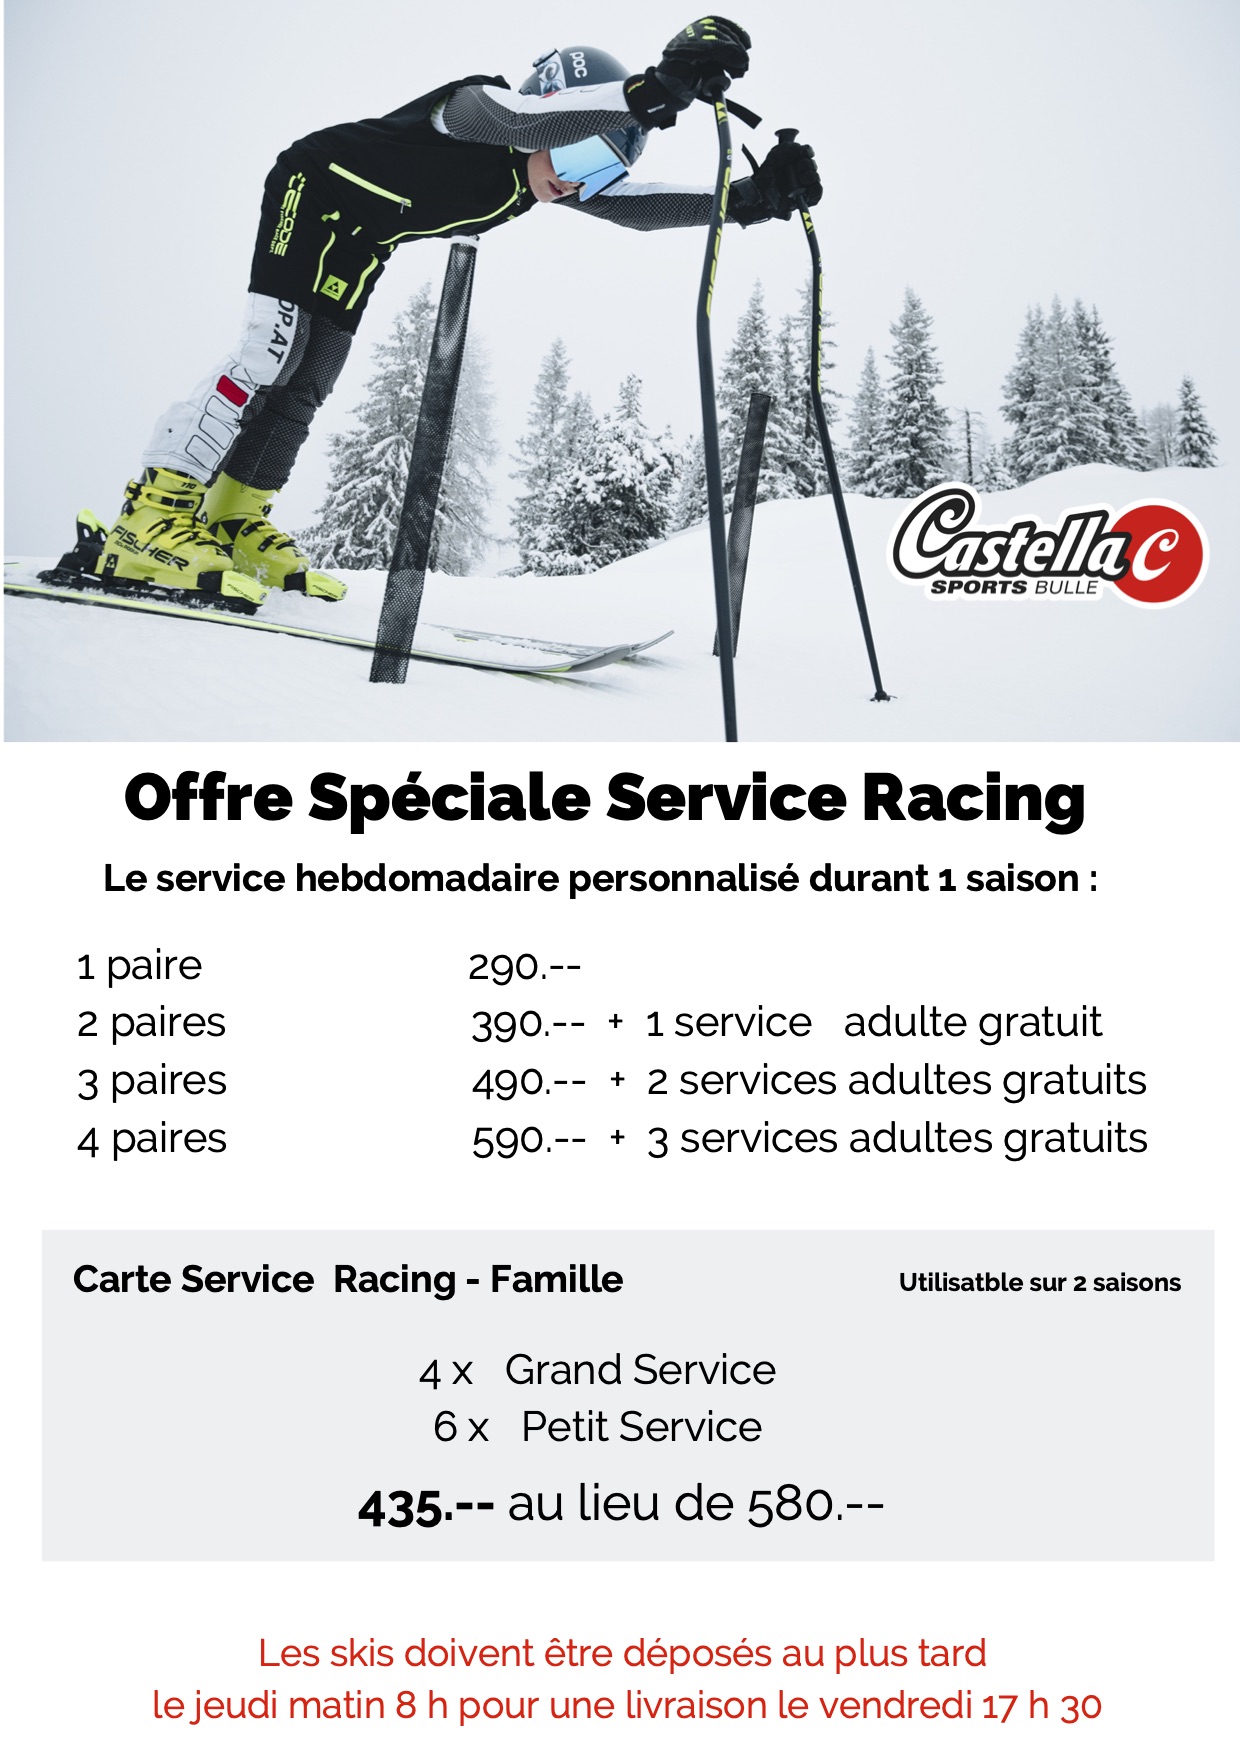 Service de ski racing version 3